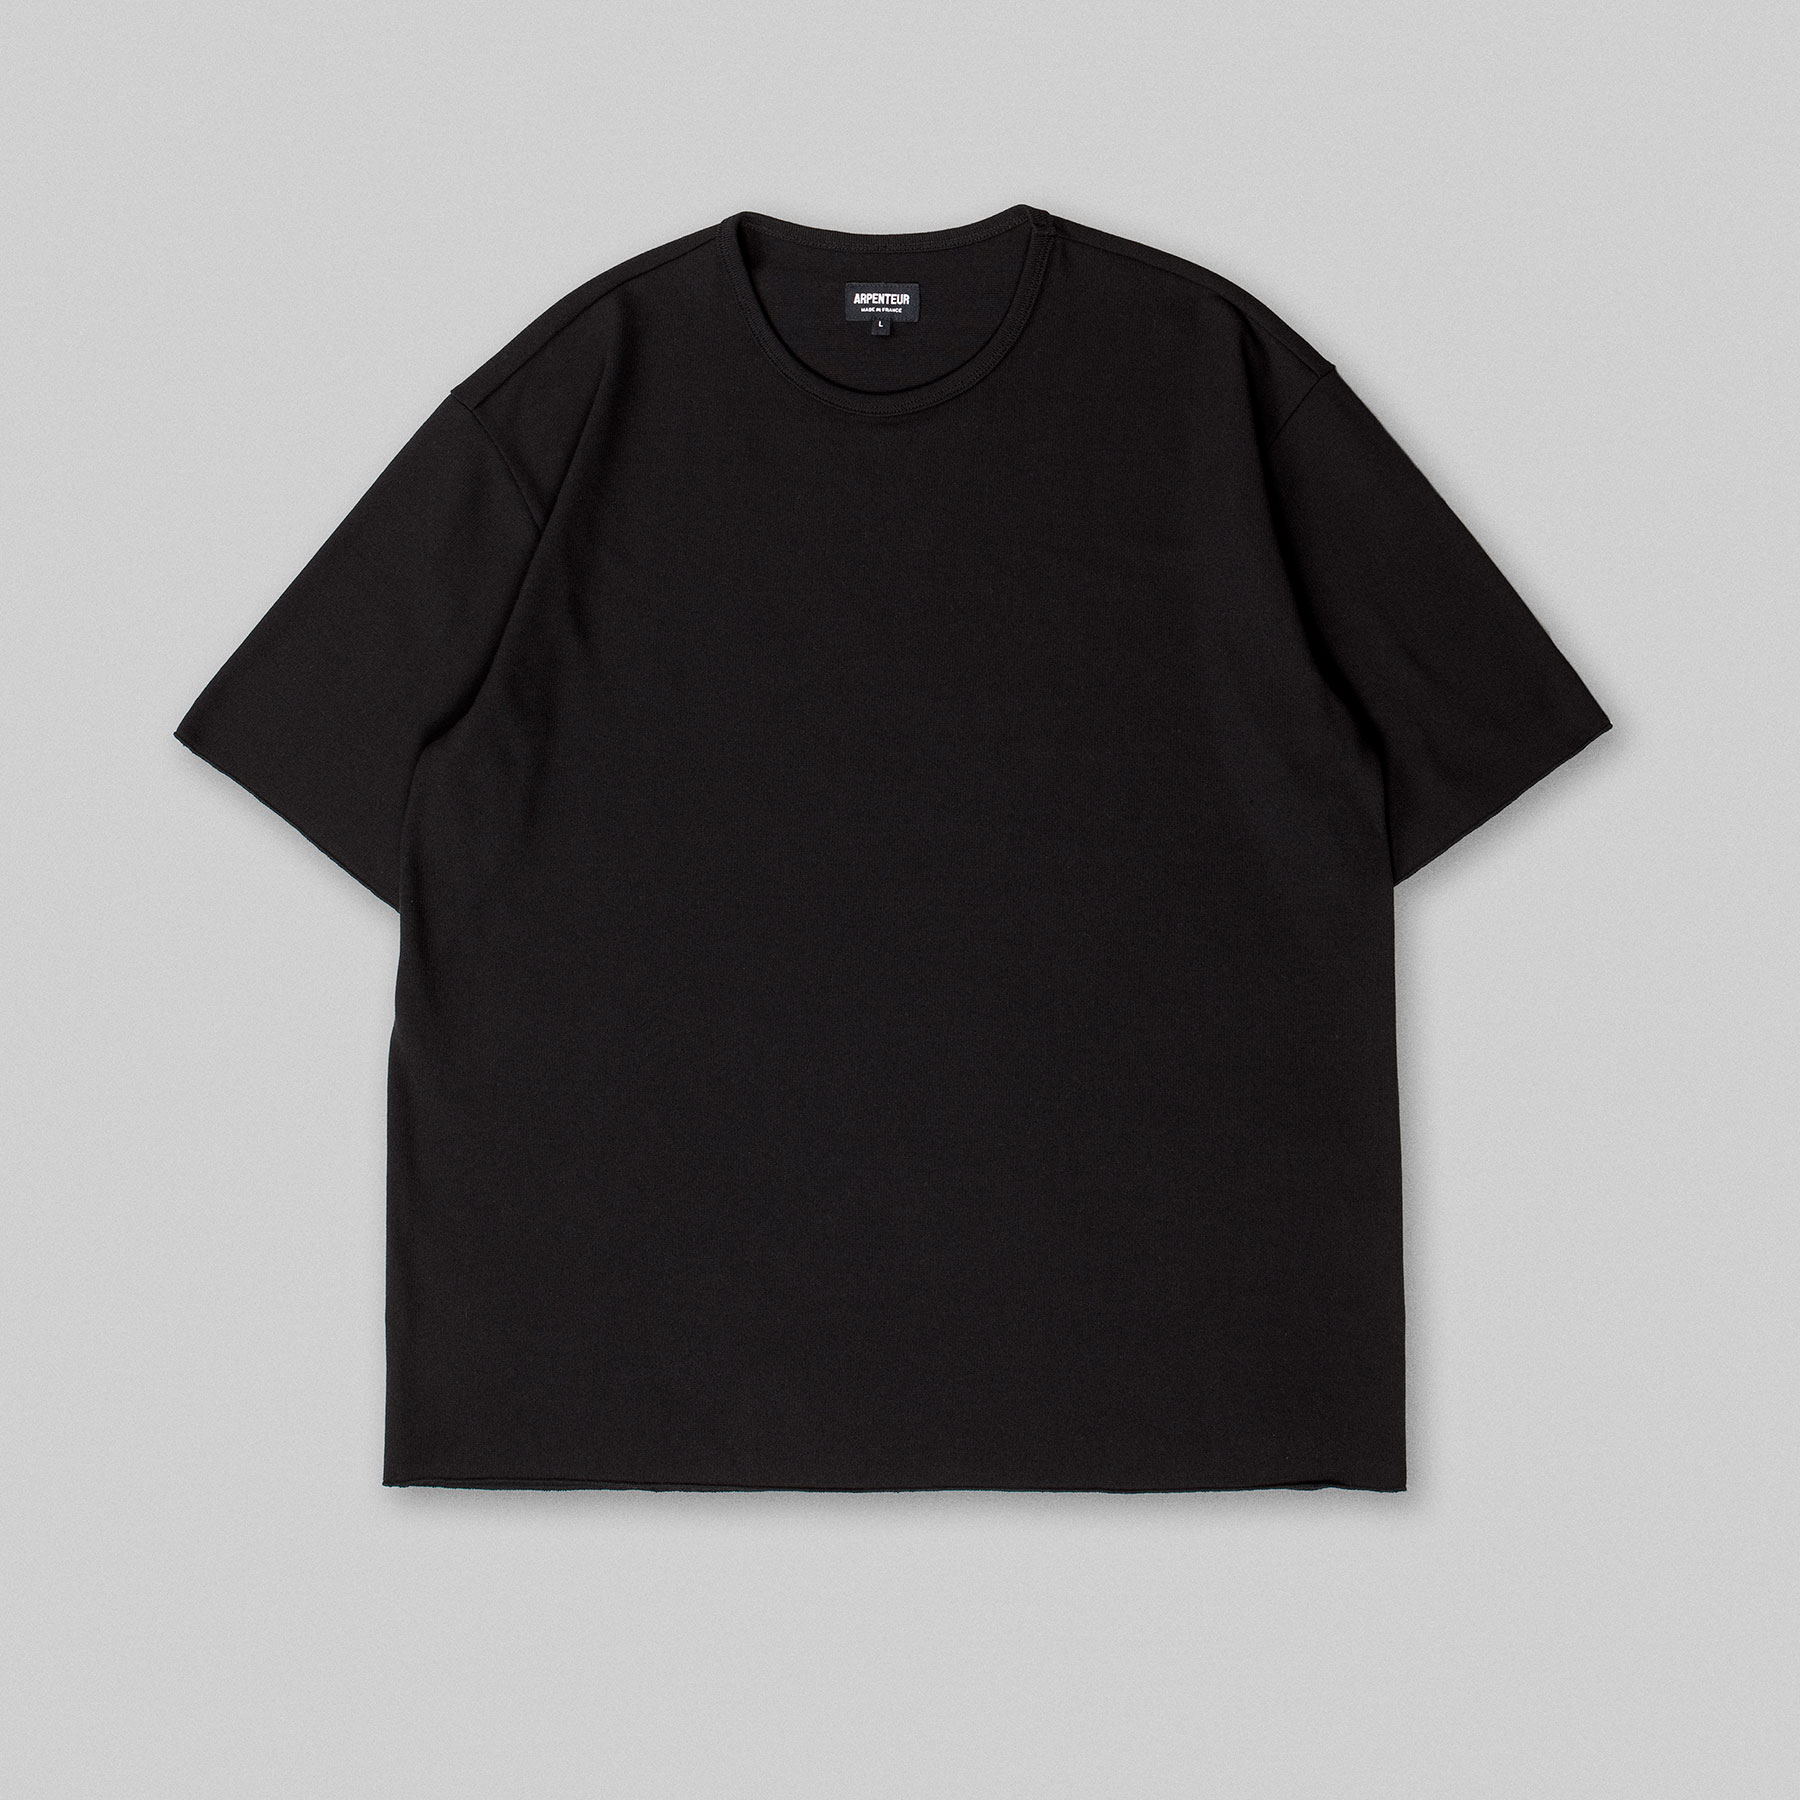 PONTUS t-shirt by Arpenteur in Black color